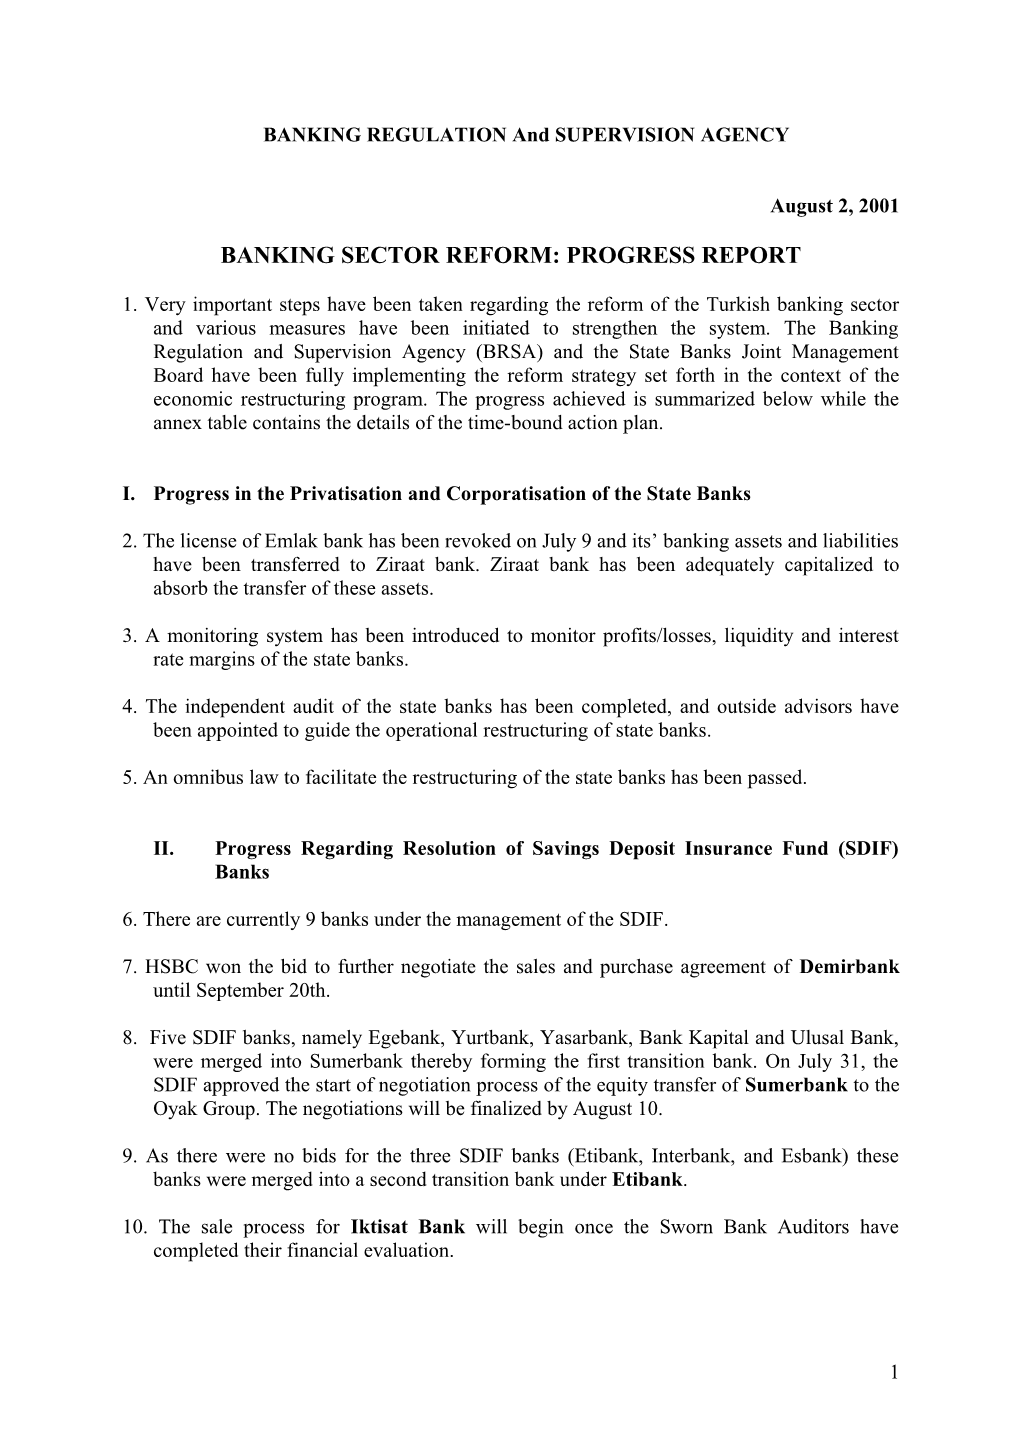 Banking Sector Reform: Progress Report